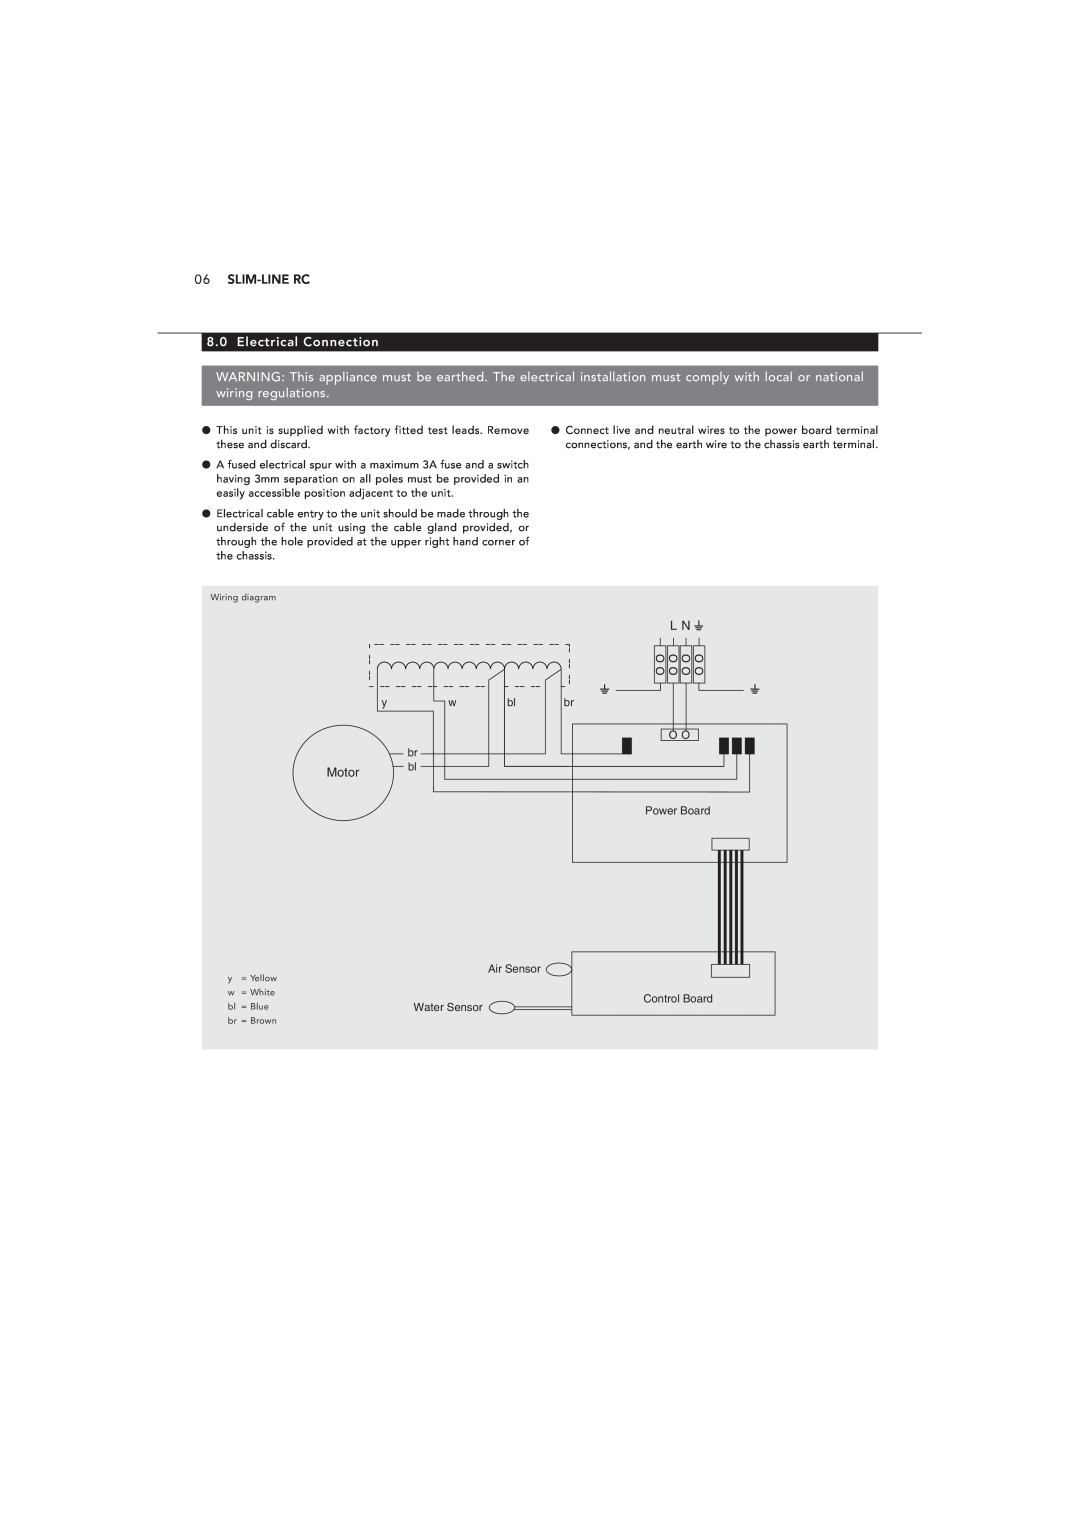 Myson 1370064 manual Slim-Line Rc, Electrical Connection, Motor bl, Power Board, Air Sensor, Control Board, Water Sensor 